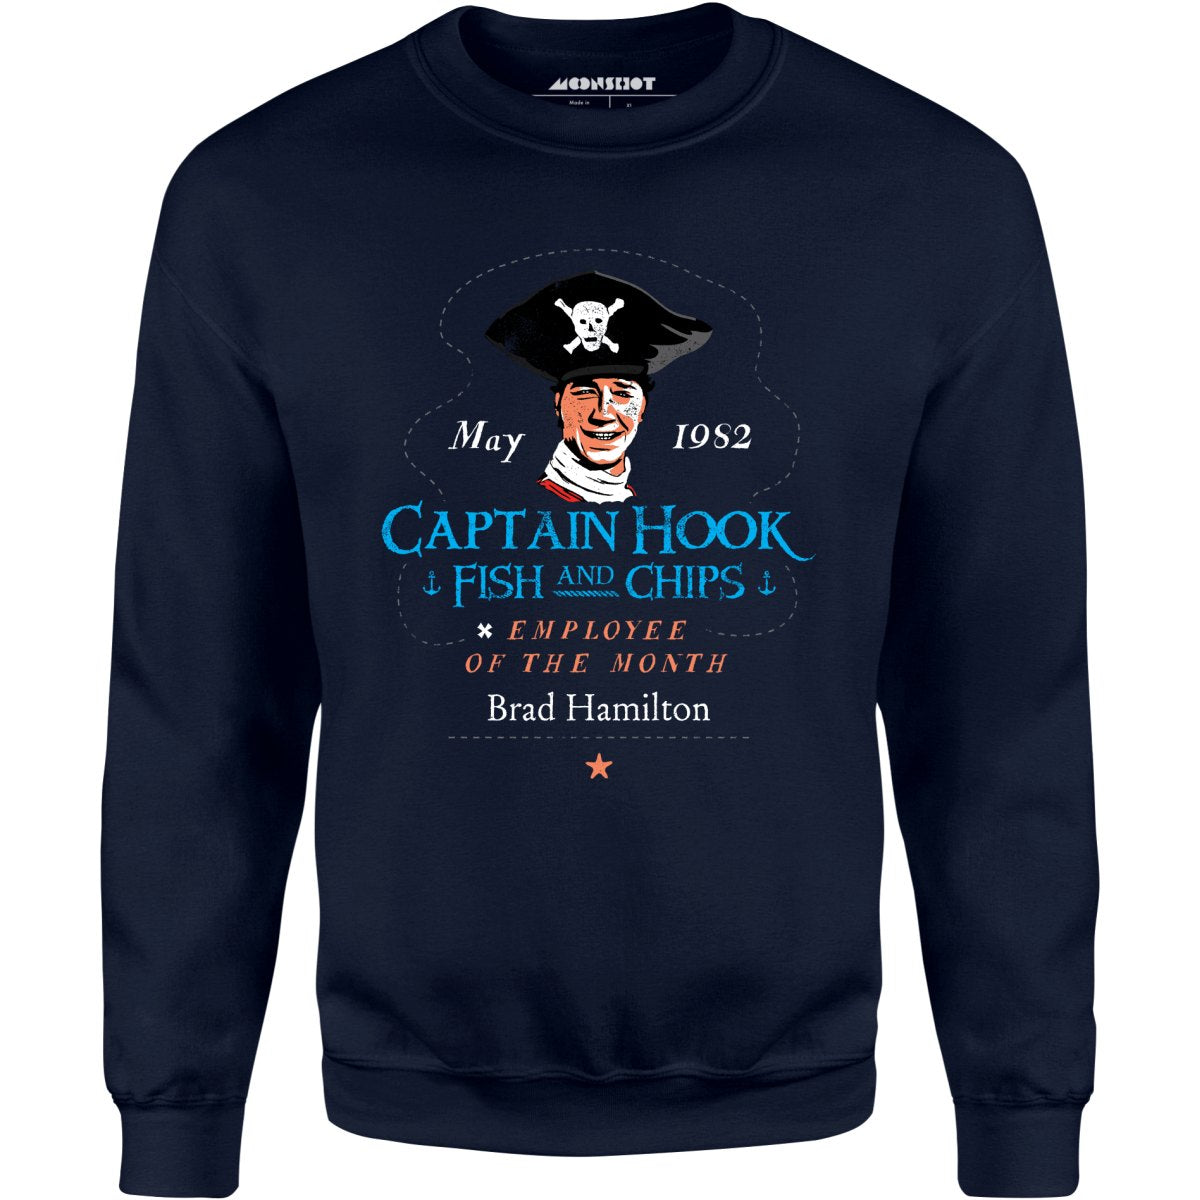 Brad Hamilton - Captain Hook Fish & Chips - Unisex Sweatshirt